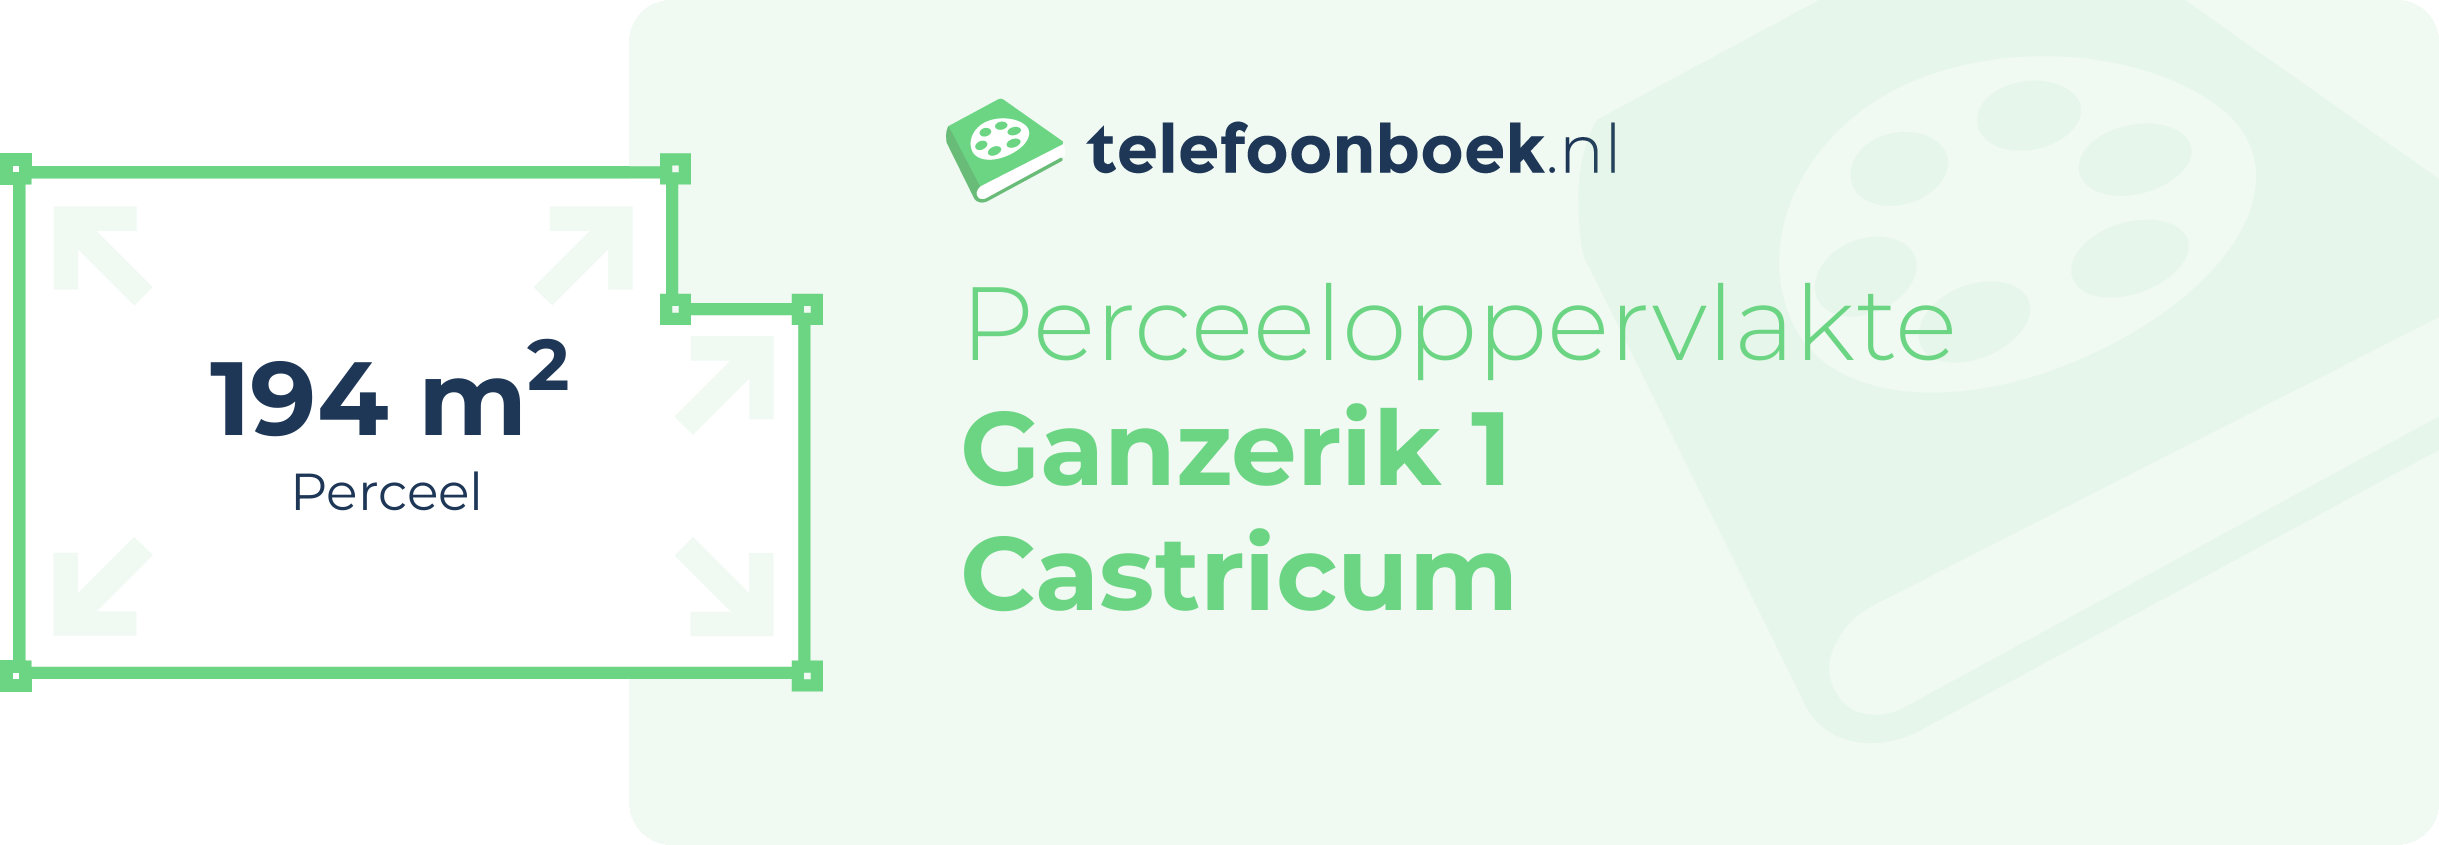 Perceeloppervlakte Ganzerik 1 Castricum